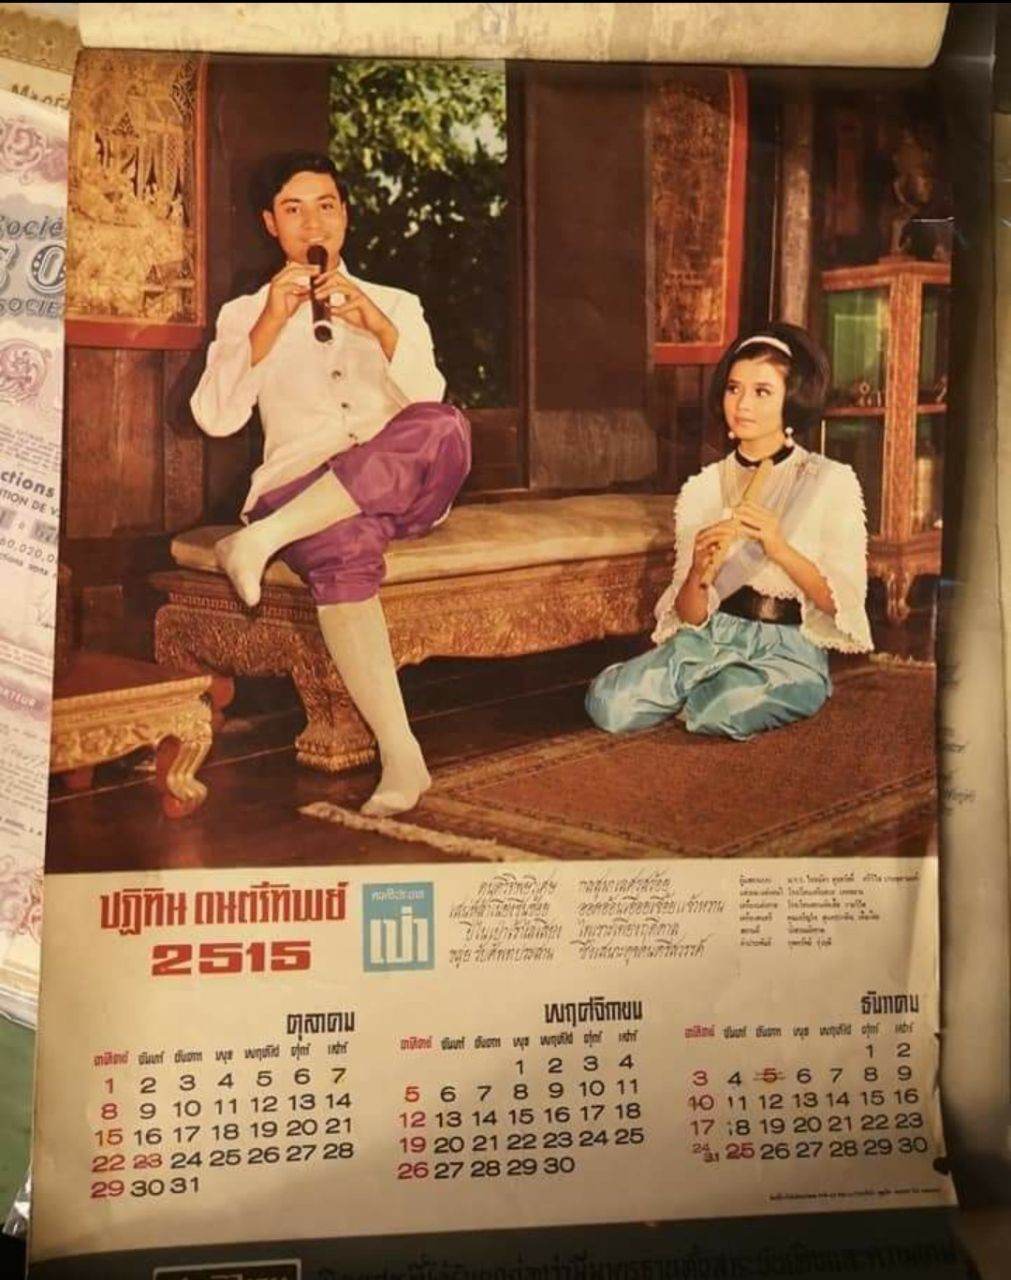 Thailand national costume 🇹🇭 ปฏิทินชุดไทย เมื่อปี 2515 (1972) สวยงามตามยุคสมัย:Traditional Thailand dress.